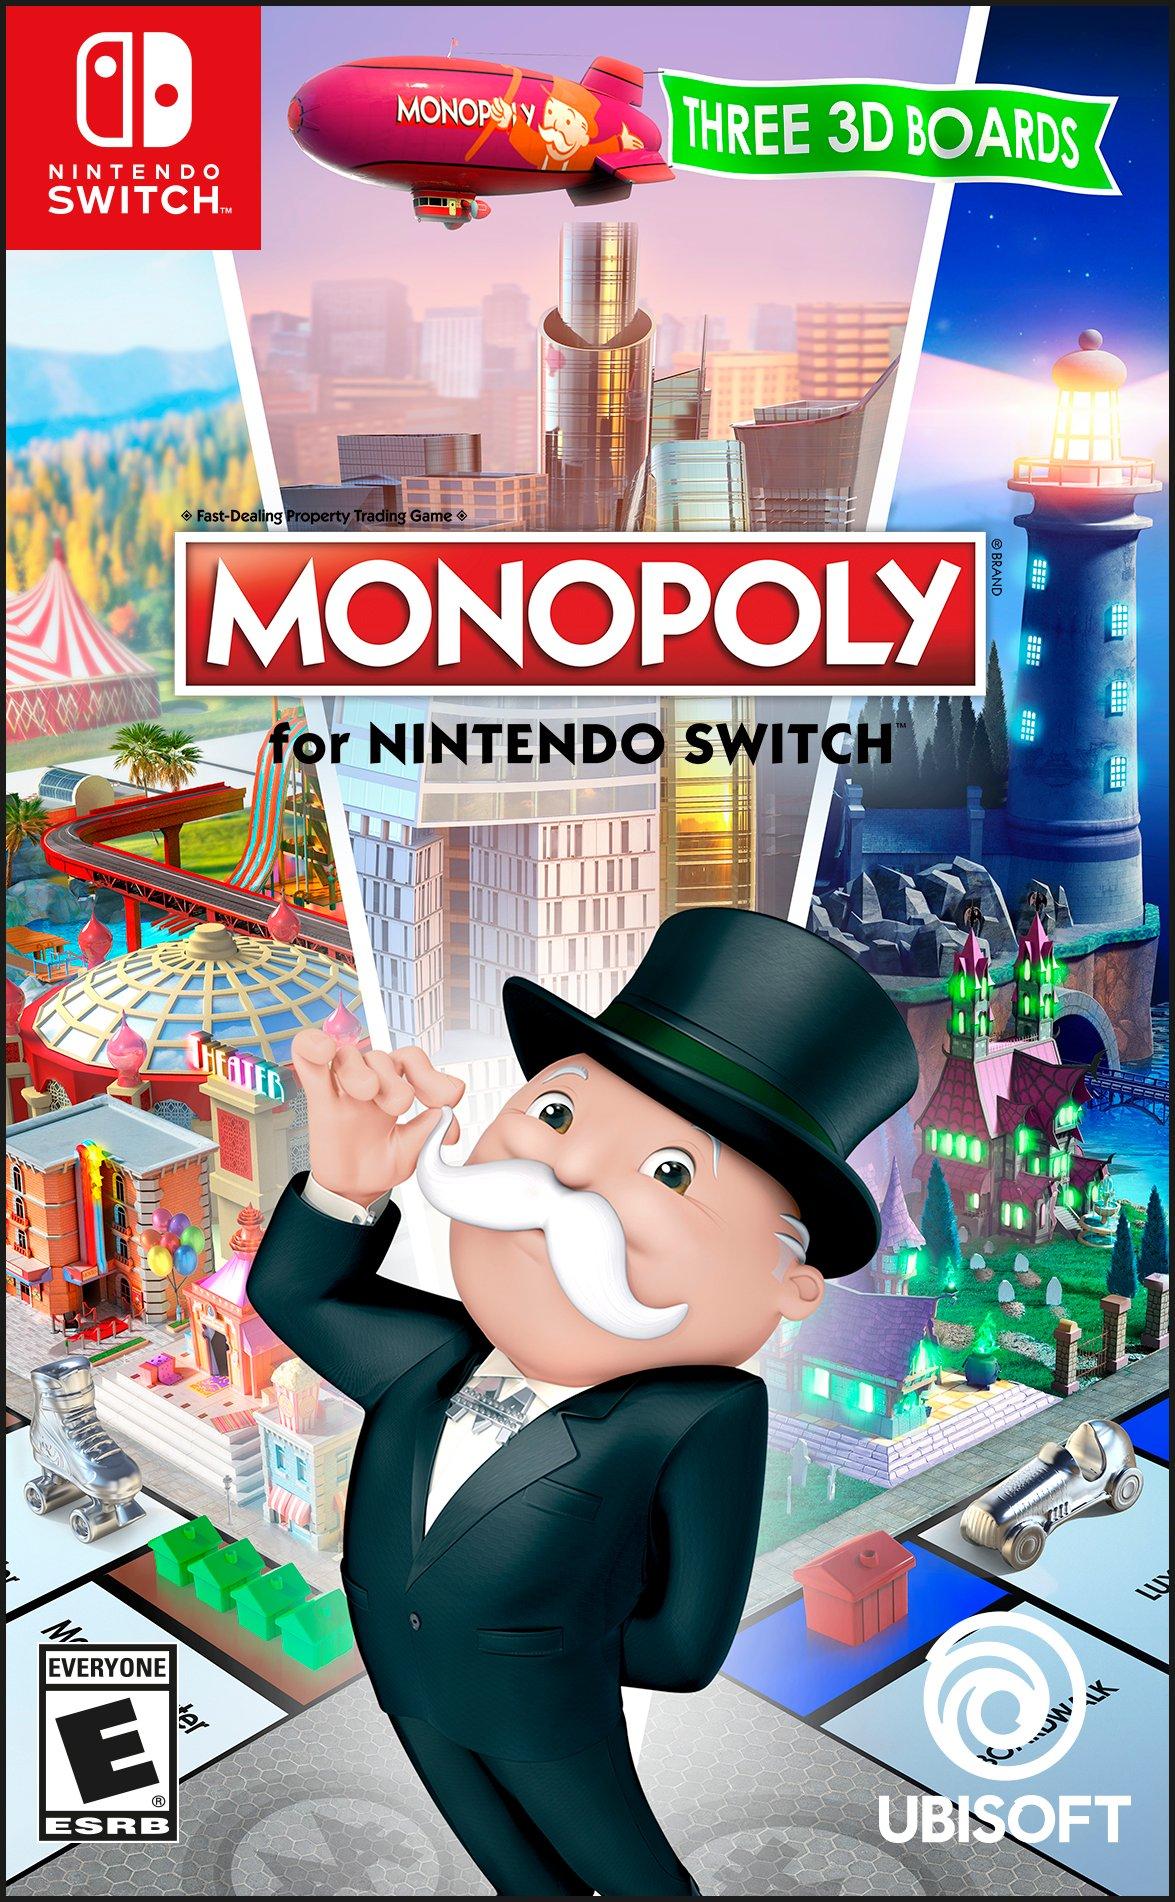 Monopoly for Nintendo Switch - Nintendo Switch | Nintendo Switch